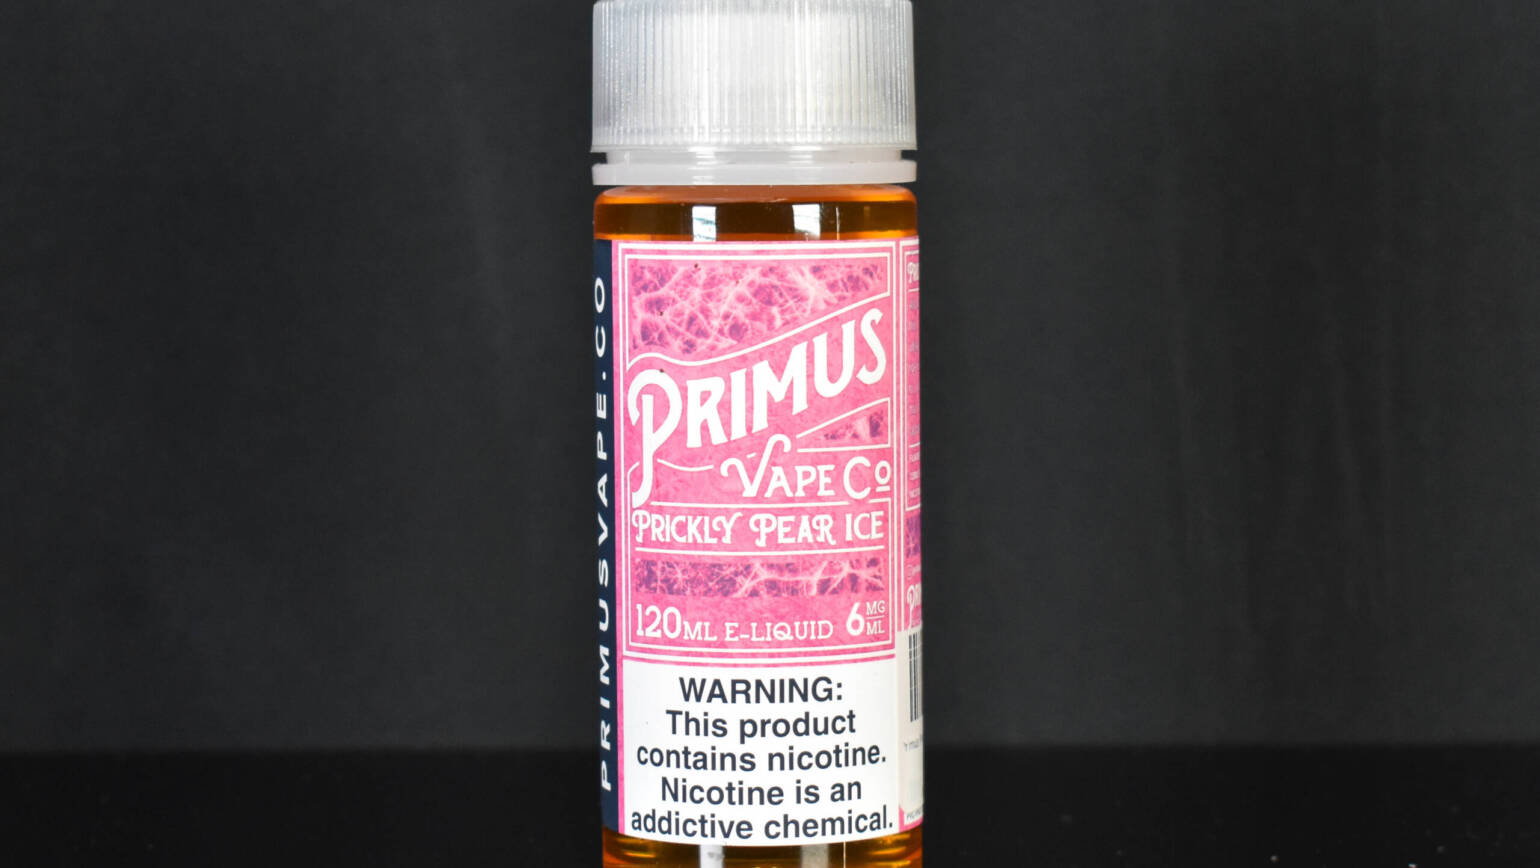 Primus Vape Co – Prickly Pear Ice